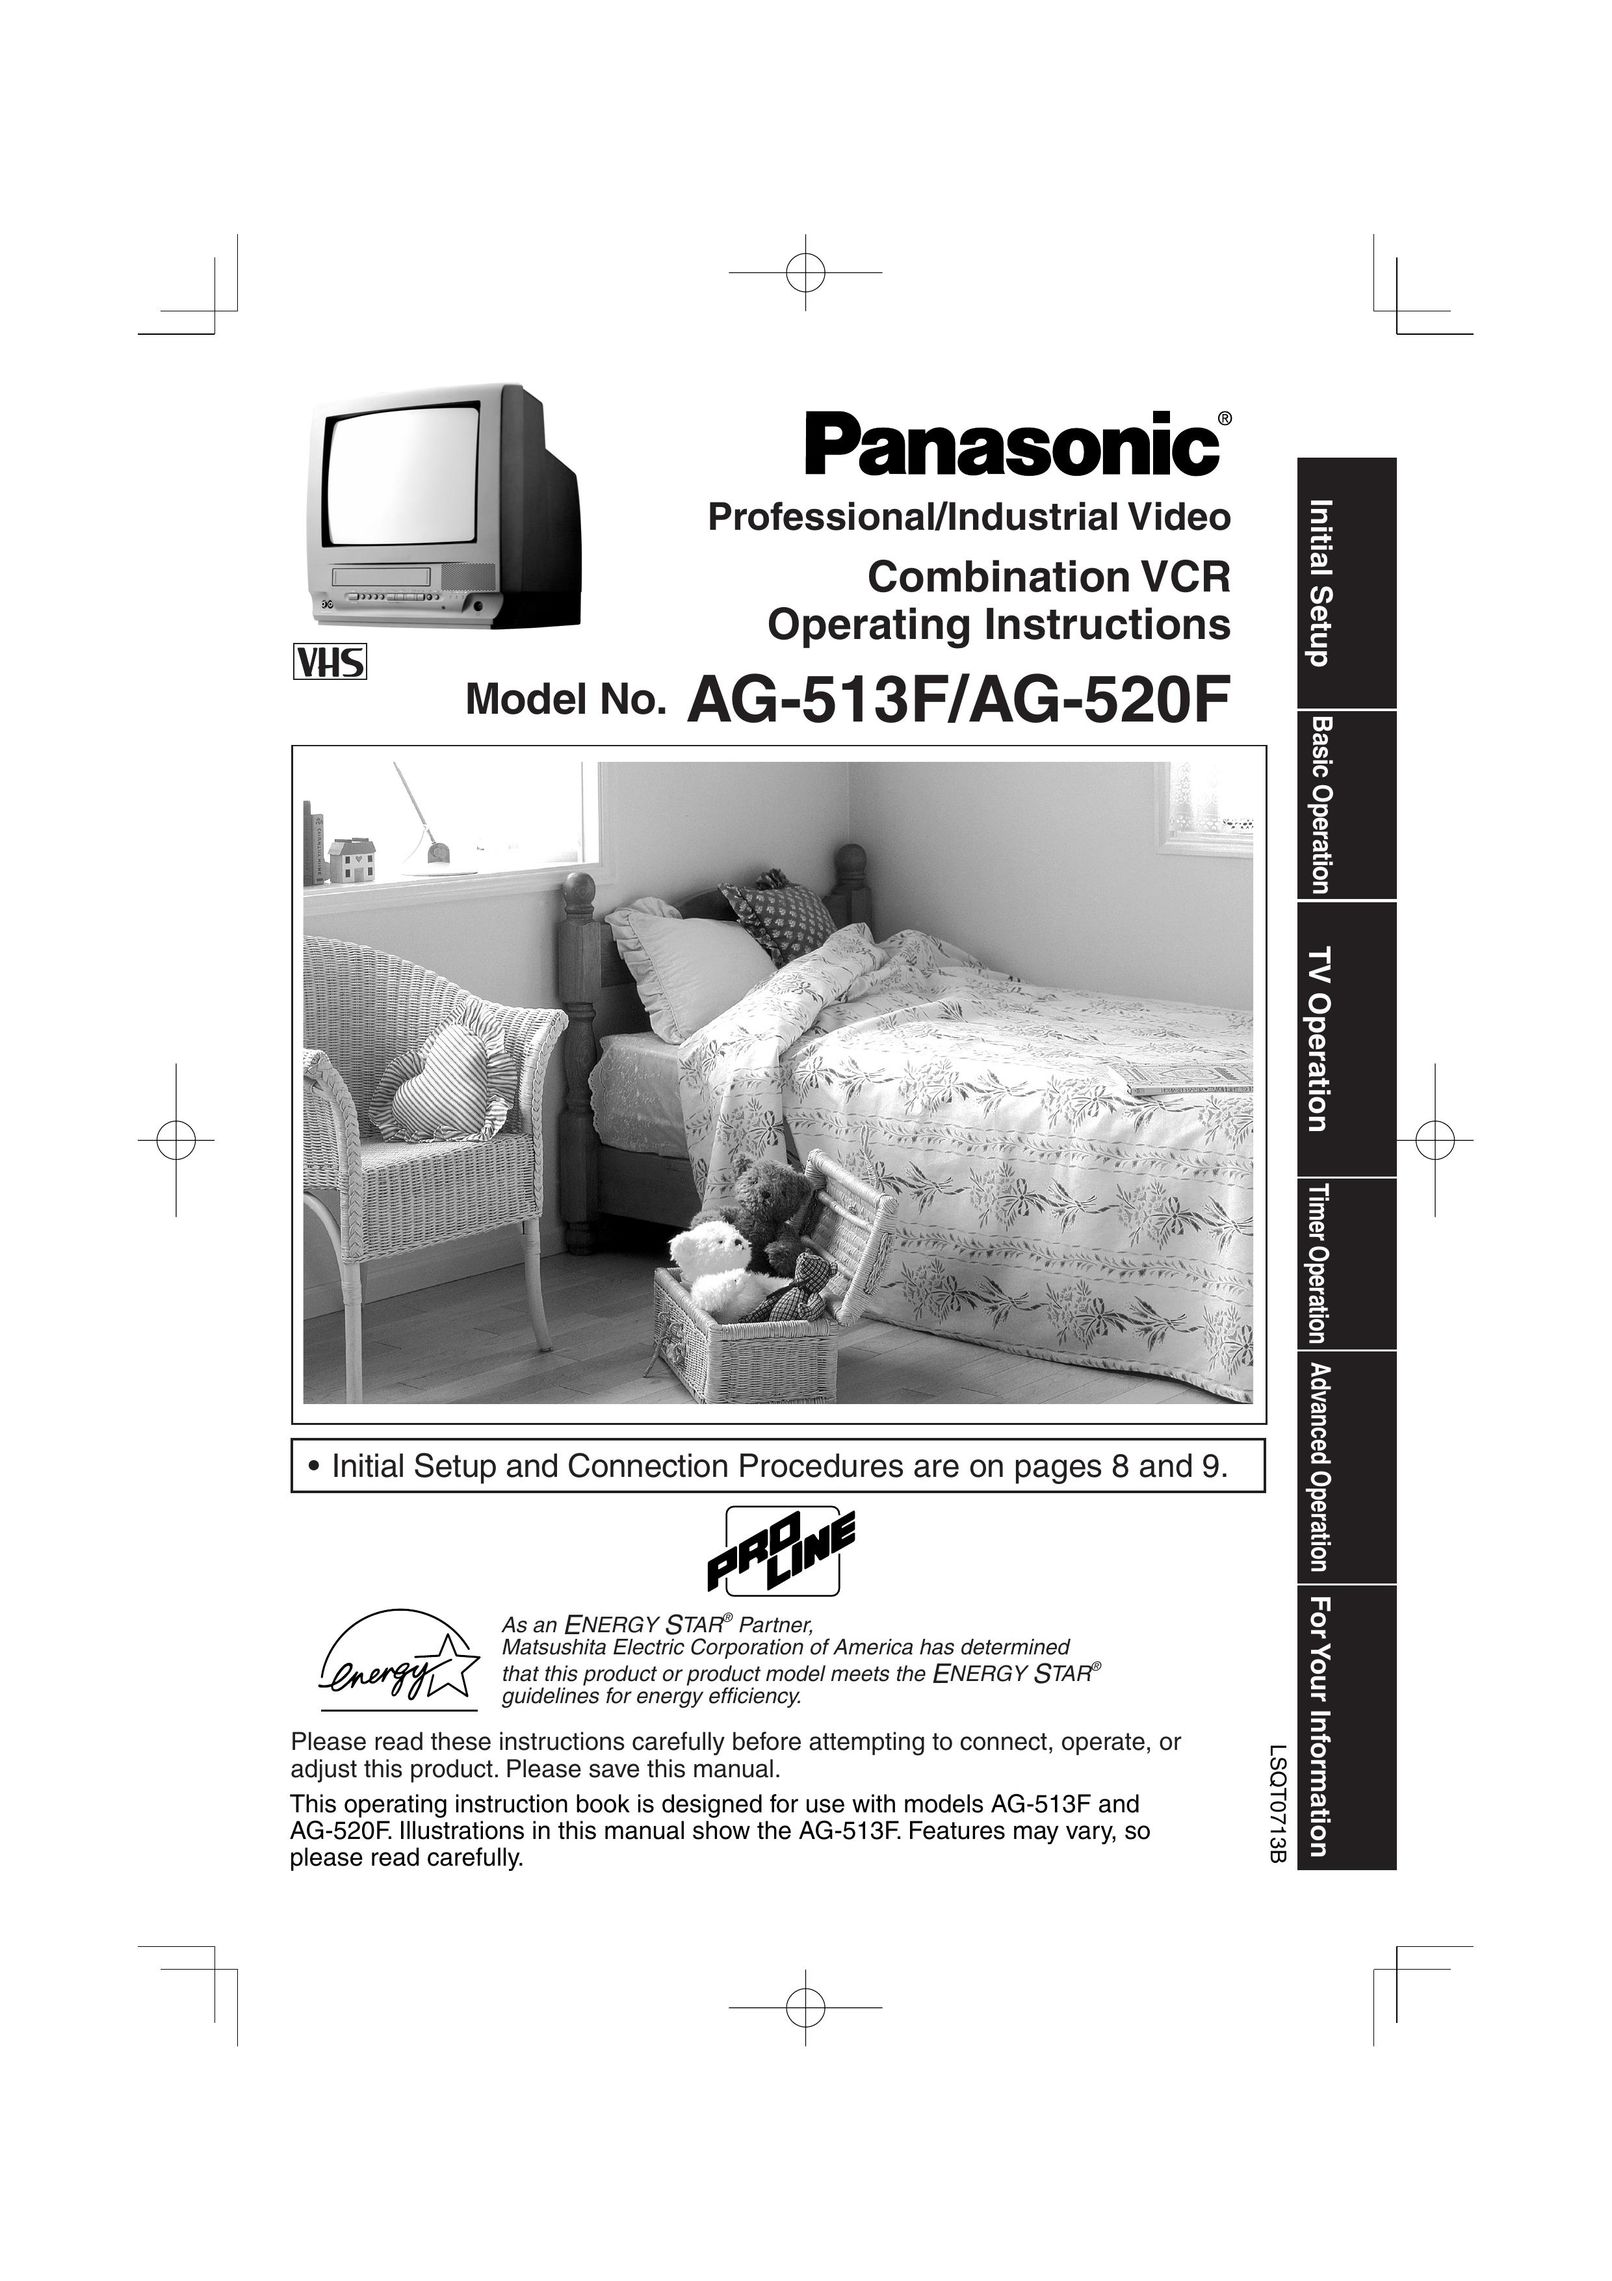 Panasonic AG-513F TV VCR Combo User Manual